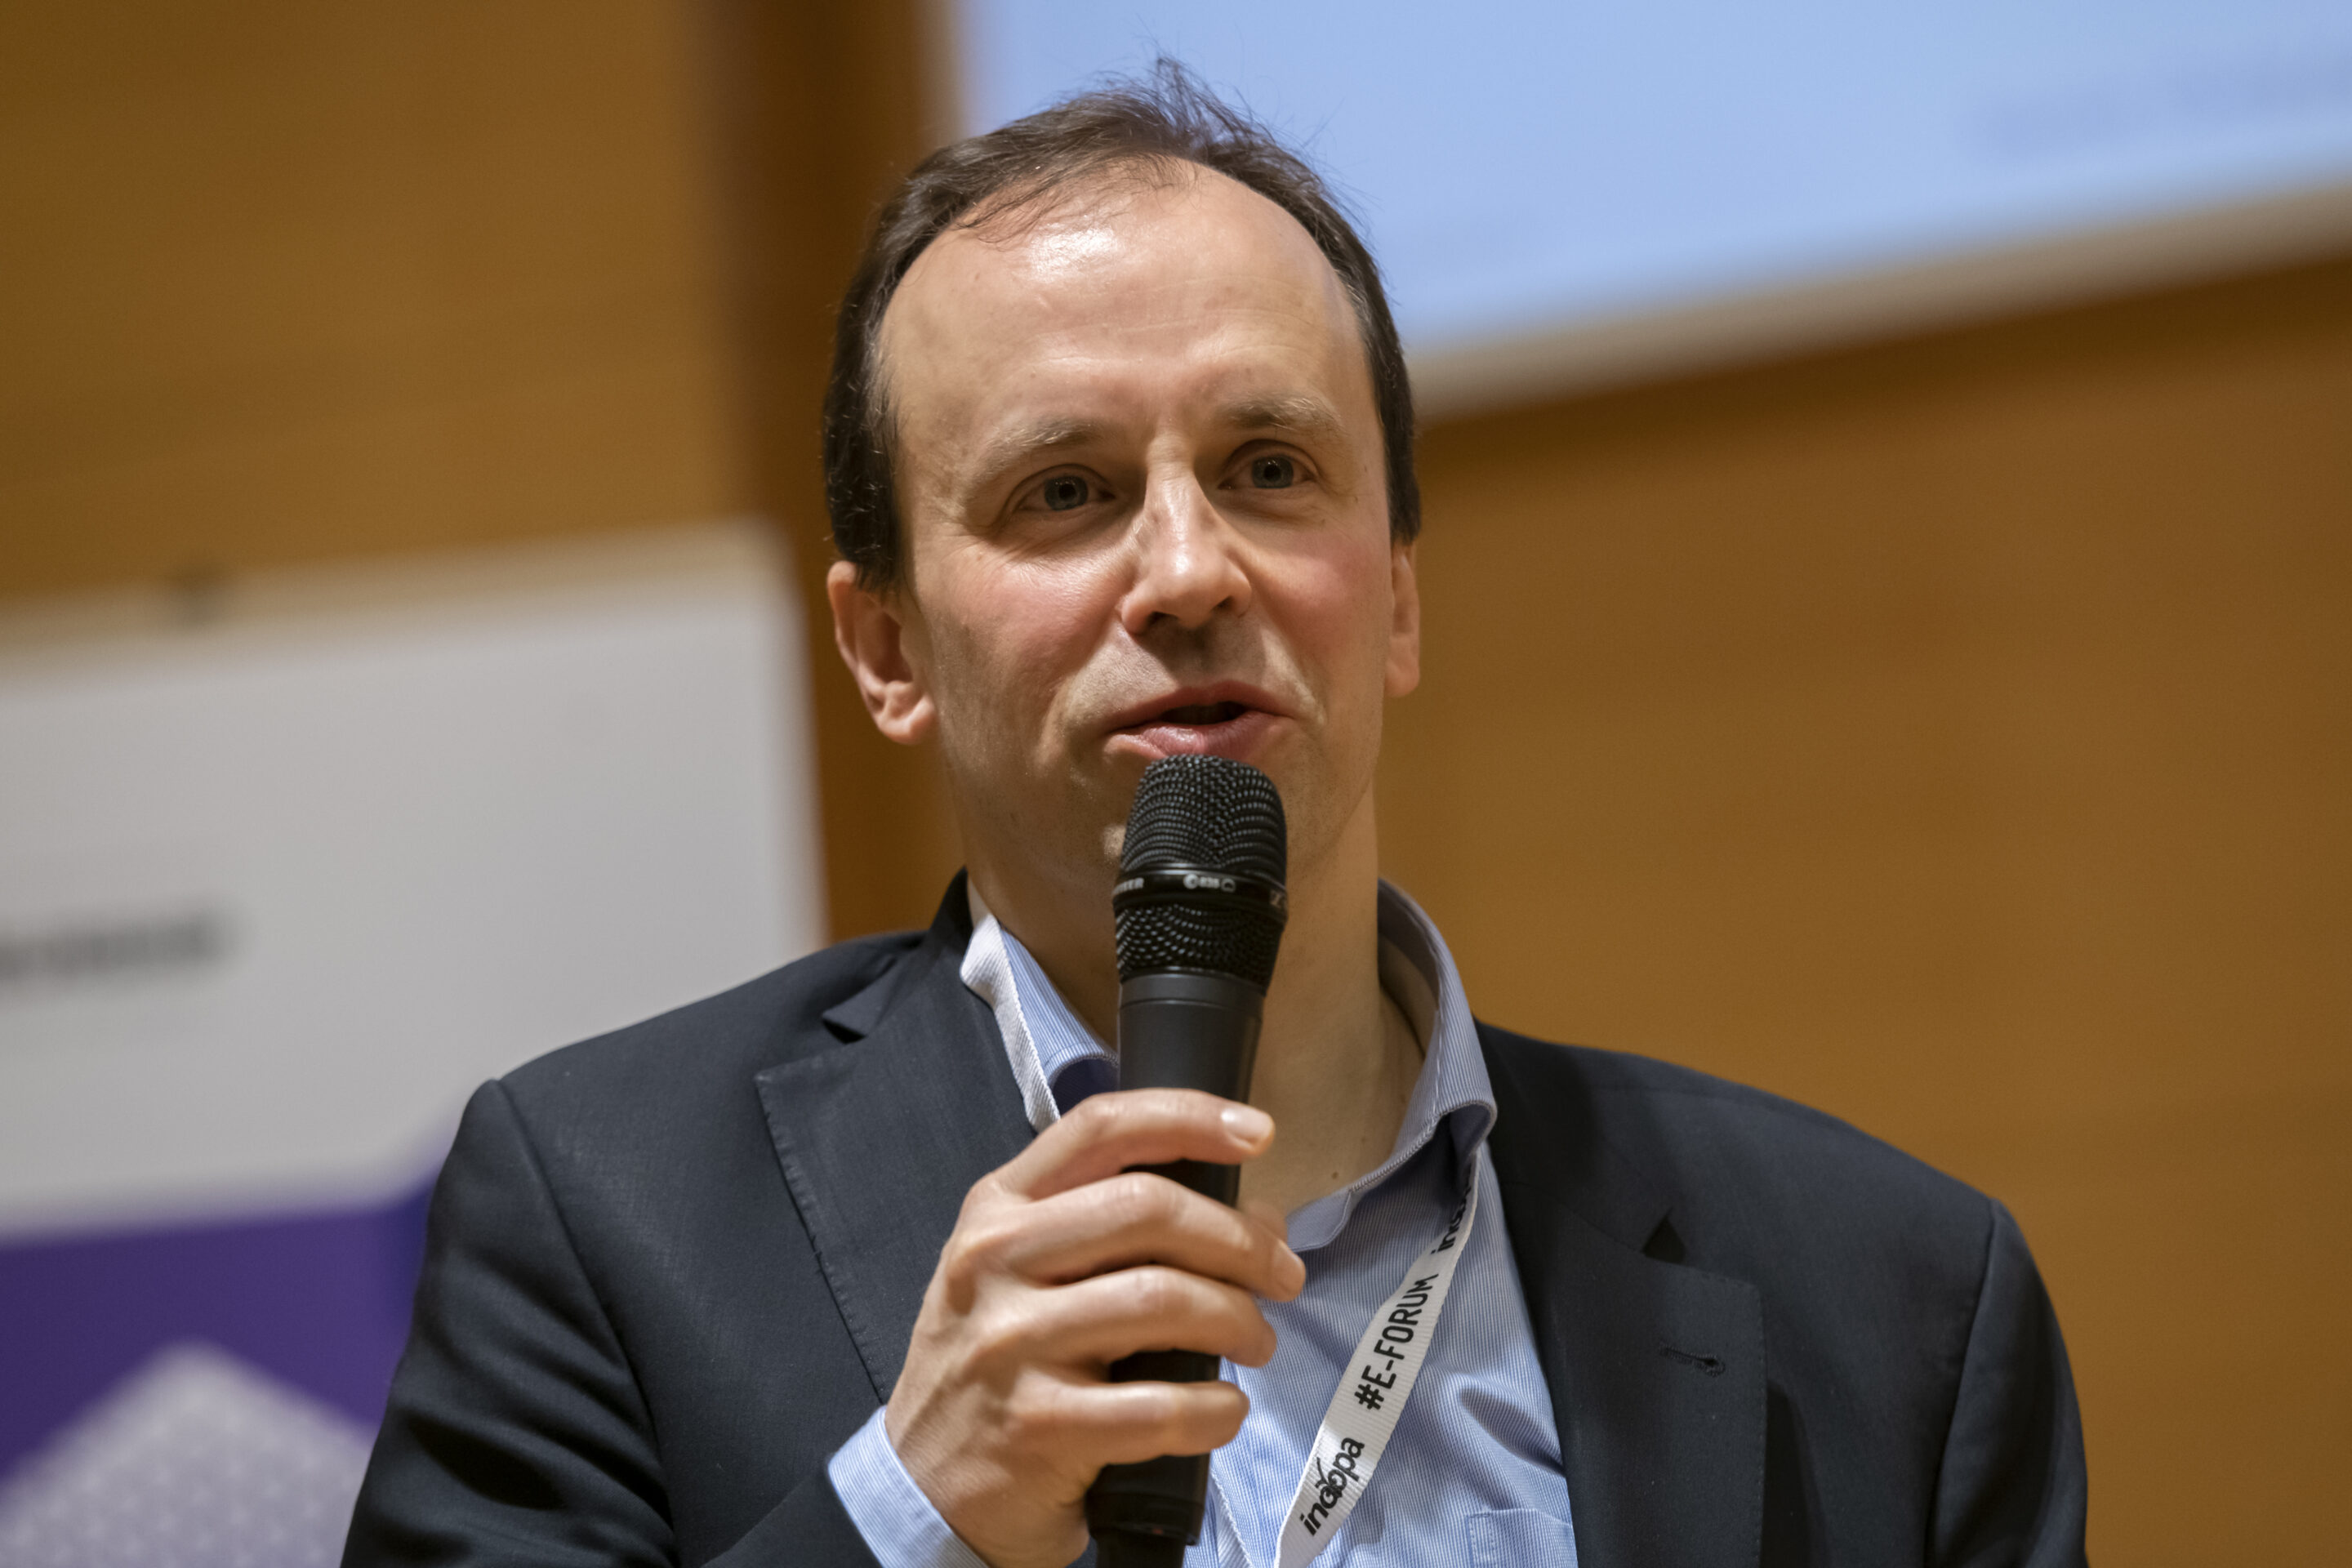 E-FORUM Luxembourg 2020 intervenant Damien Jacob